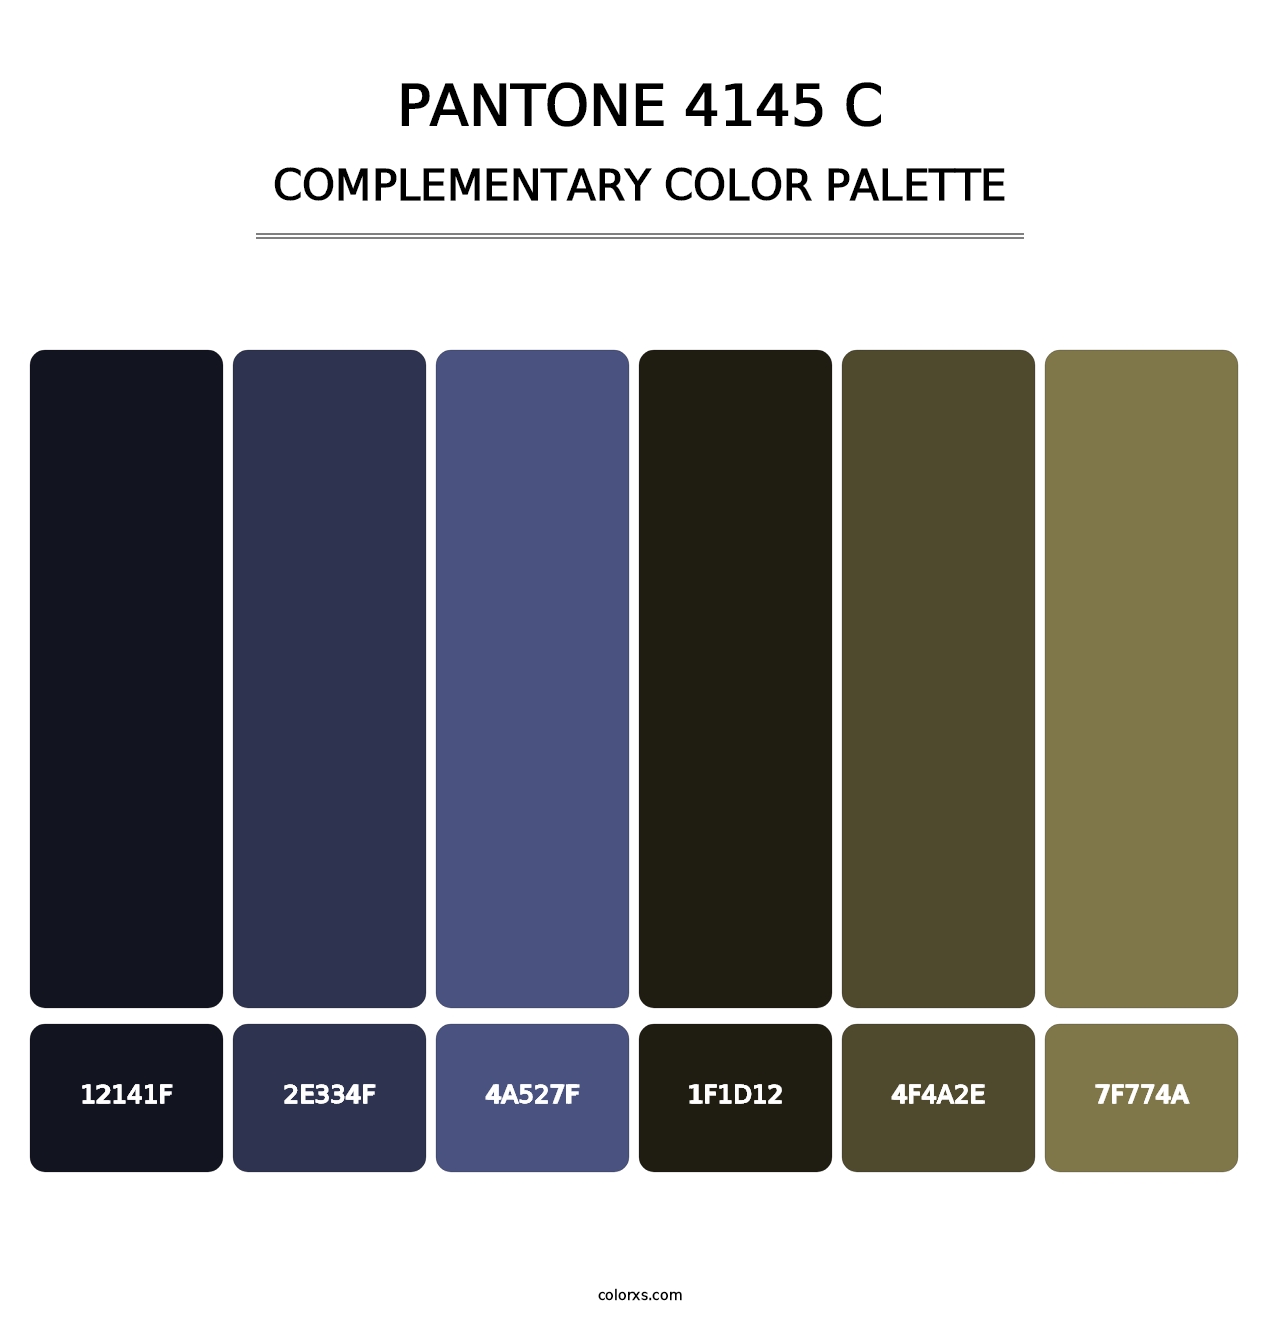 PANTONE 4145 C - Complementary Color Palette